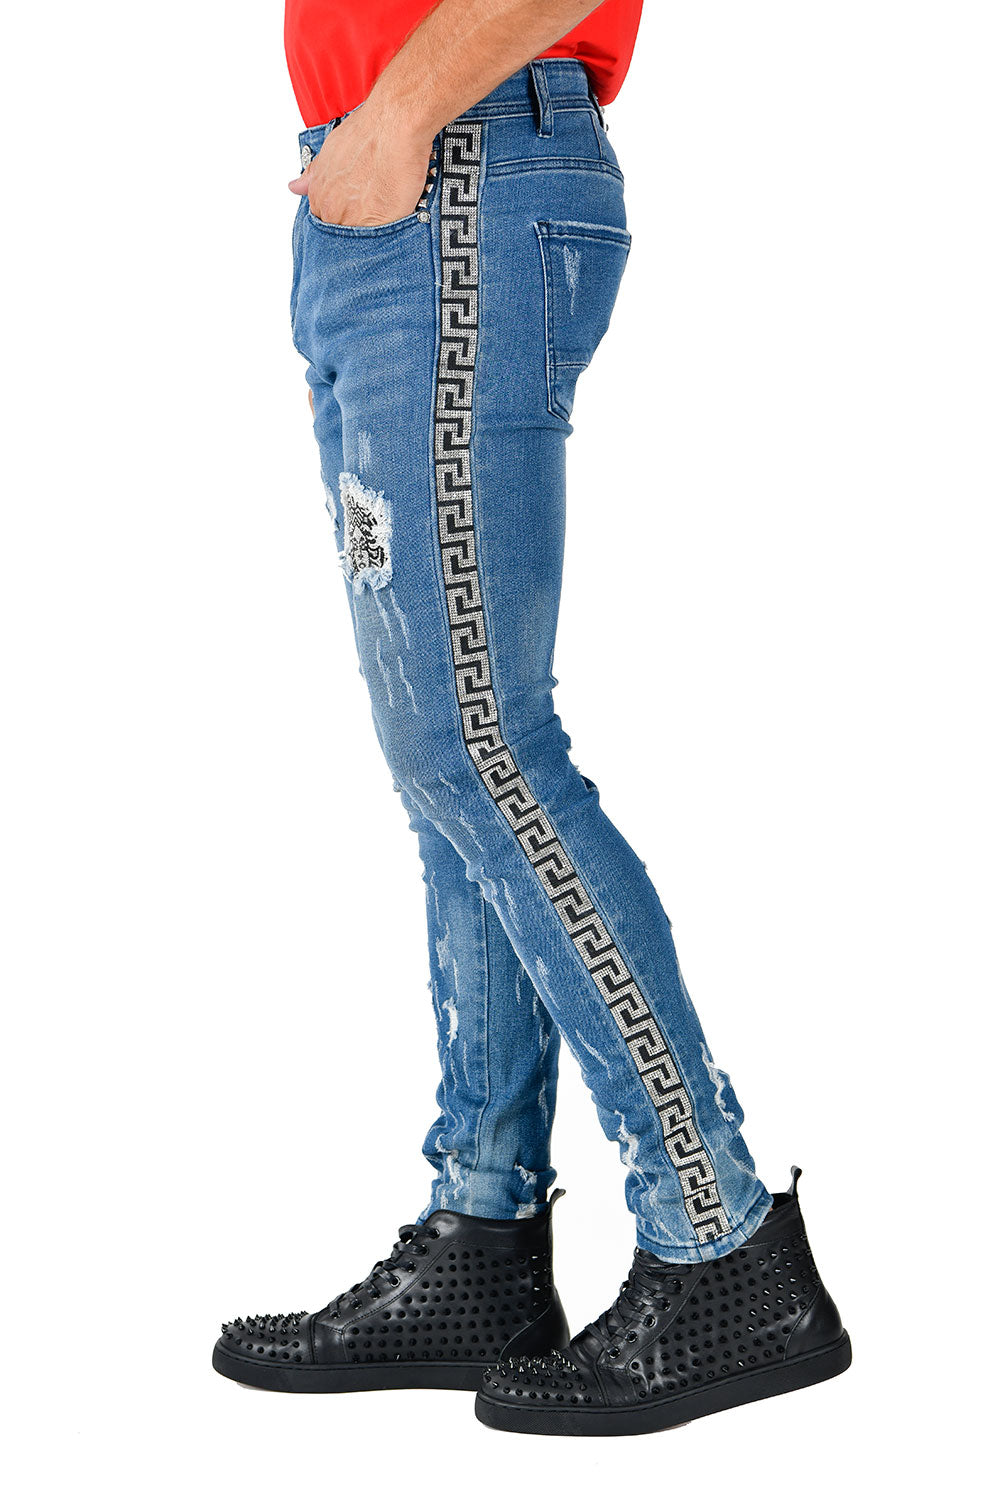 BARABAS Mens Ripped Medusa Greek Pattern Rhinestone Denim Jeans SNG003 Light Blue Silver